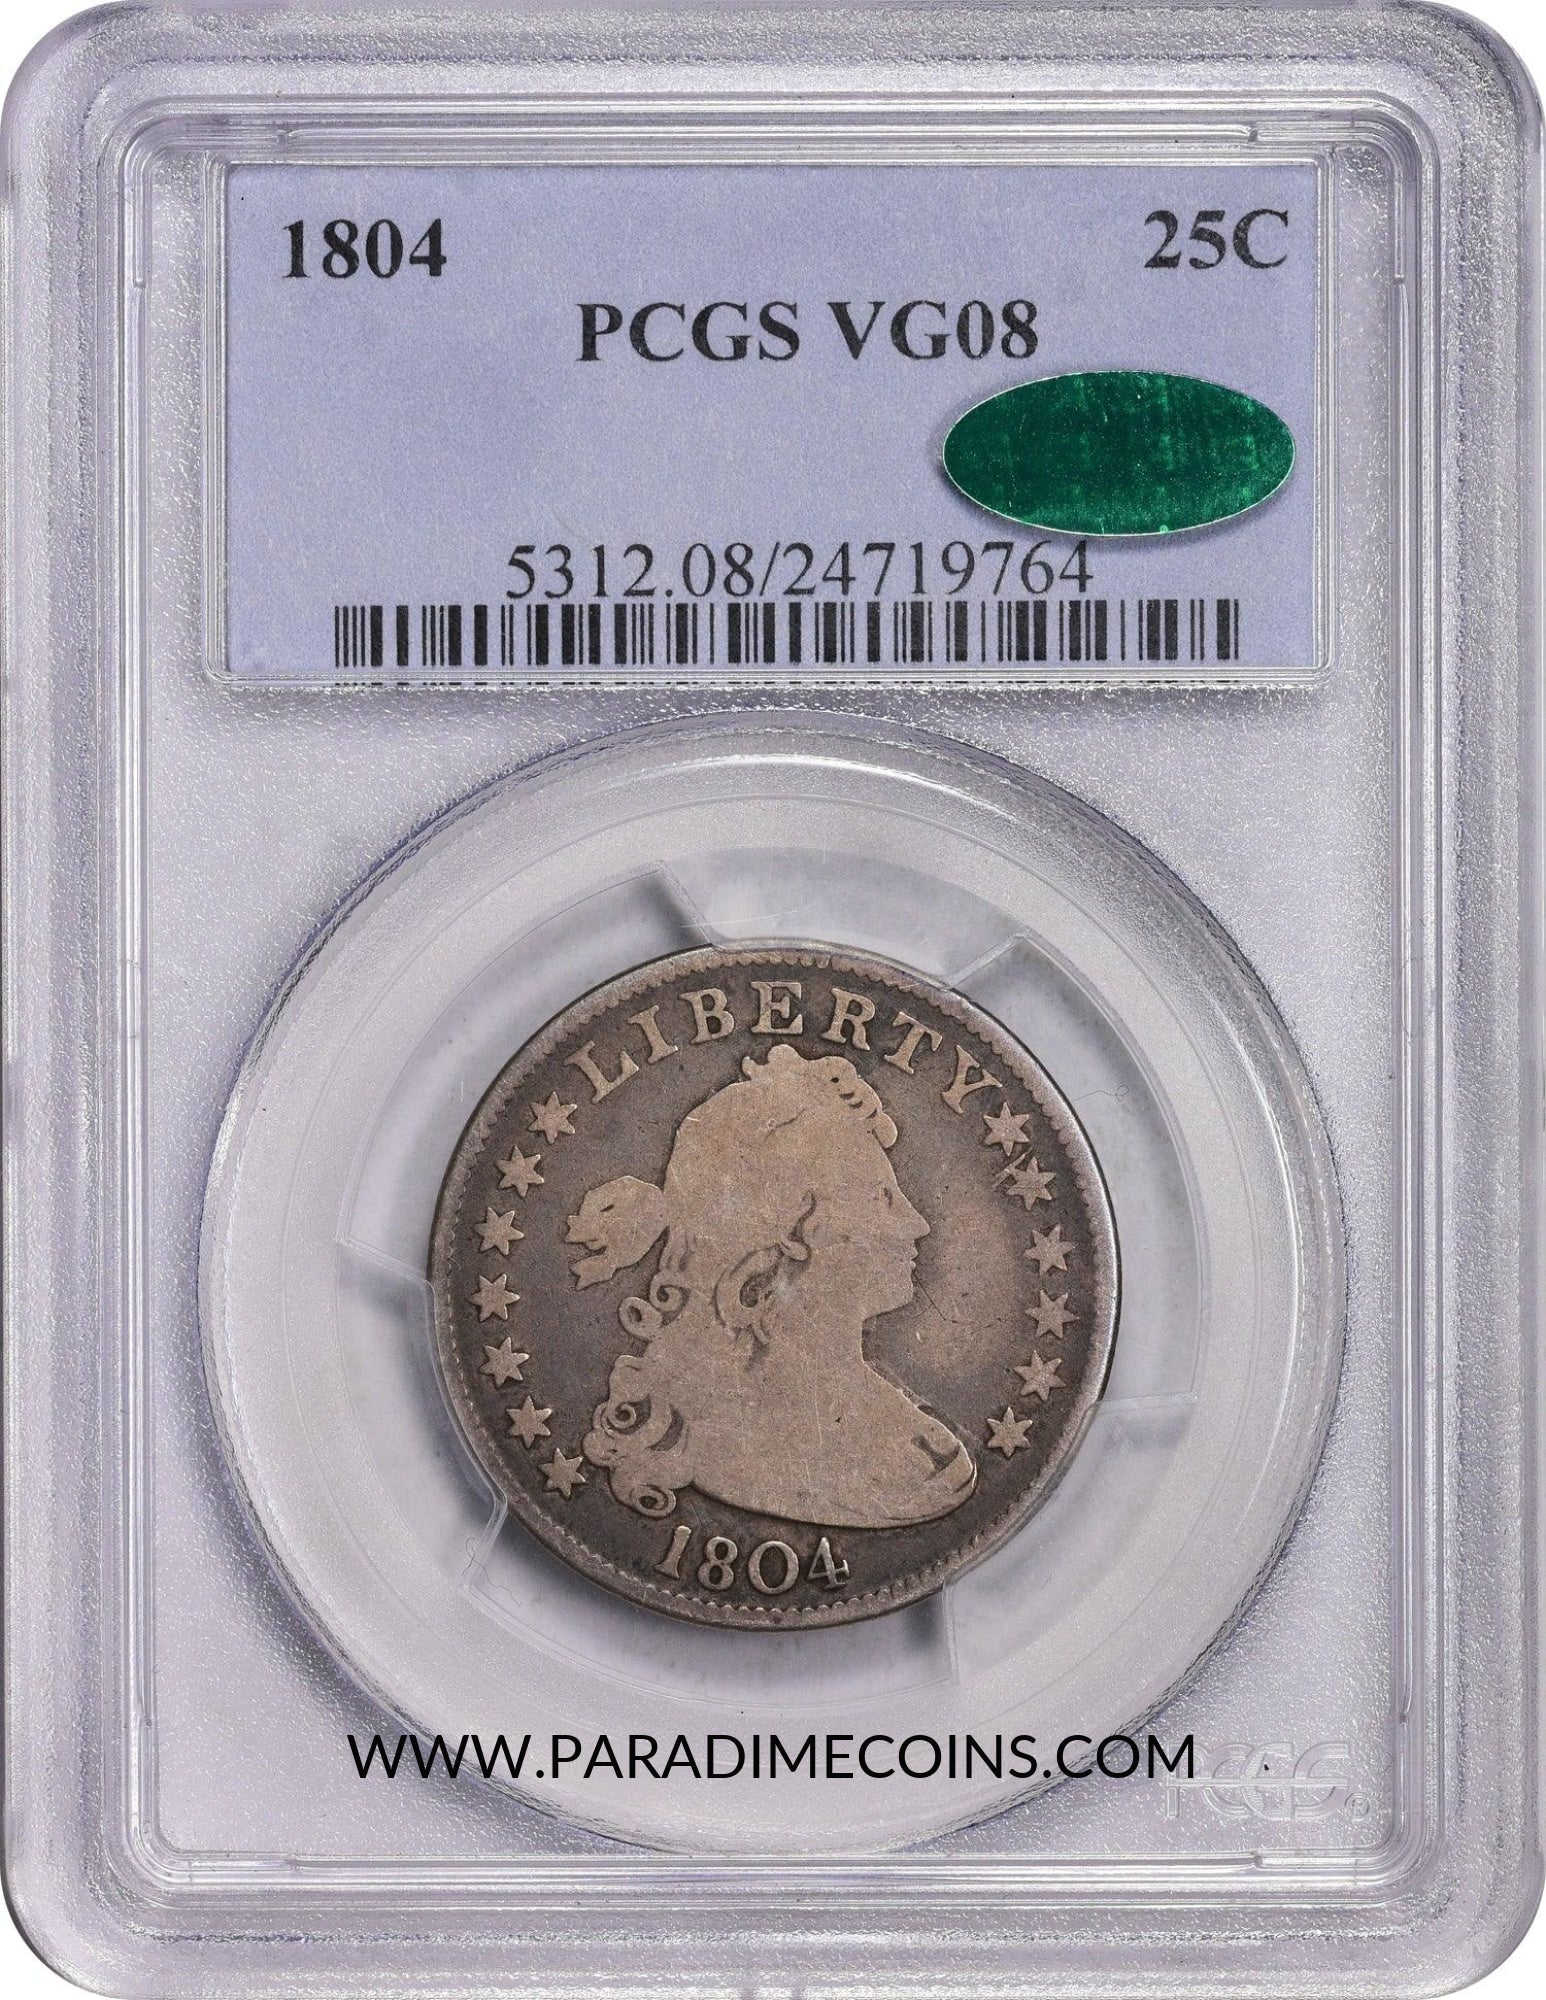 1804 25C VG08 PCGS CAC - Paradime Coins | PCGS NGC CACG CAC Rare US Numismatic Coins For Sale